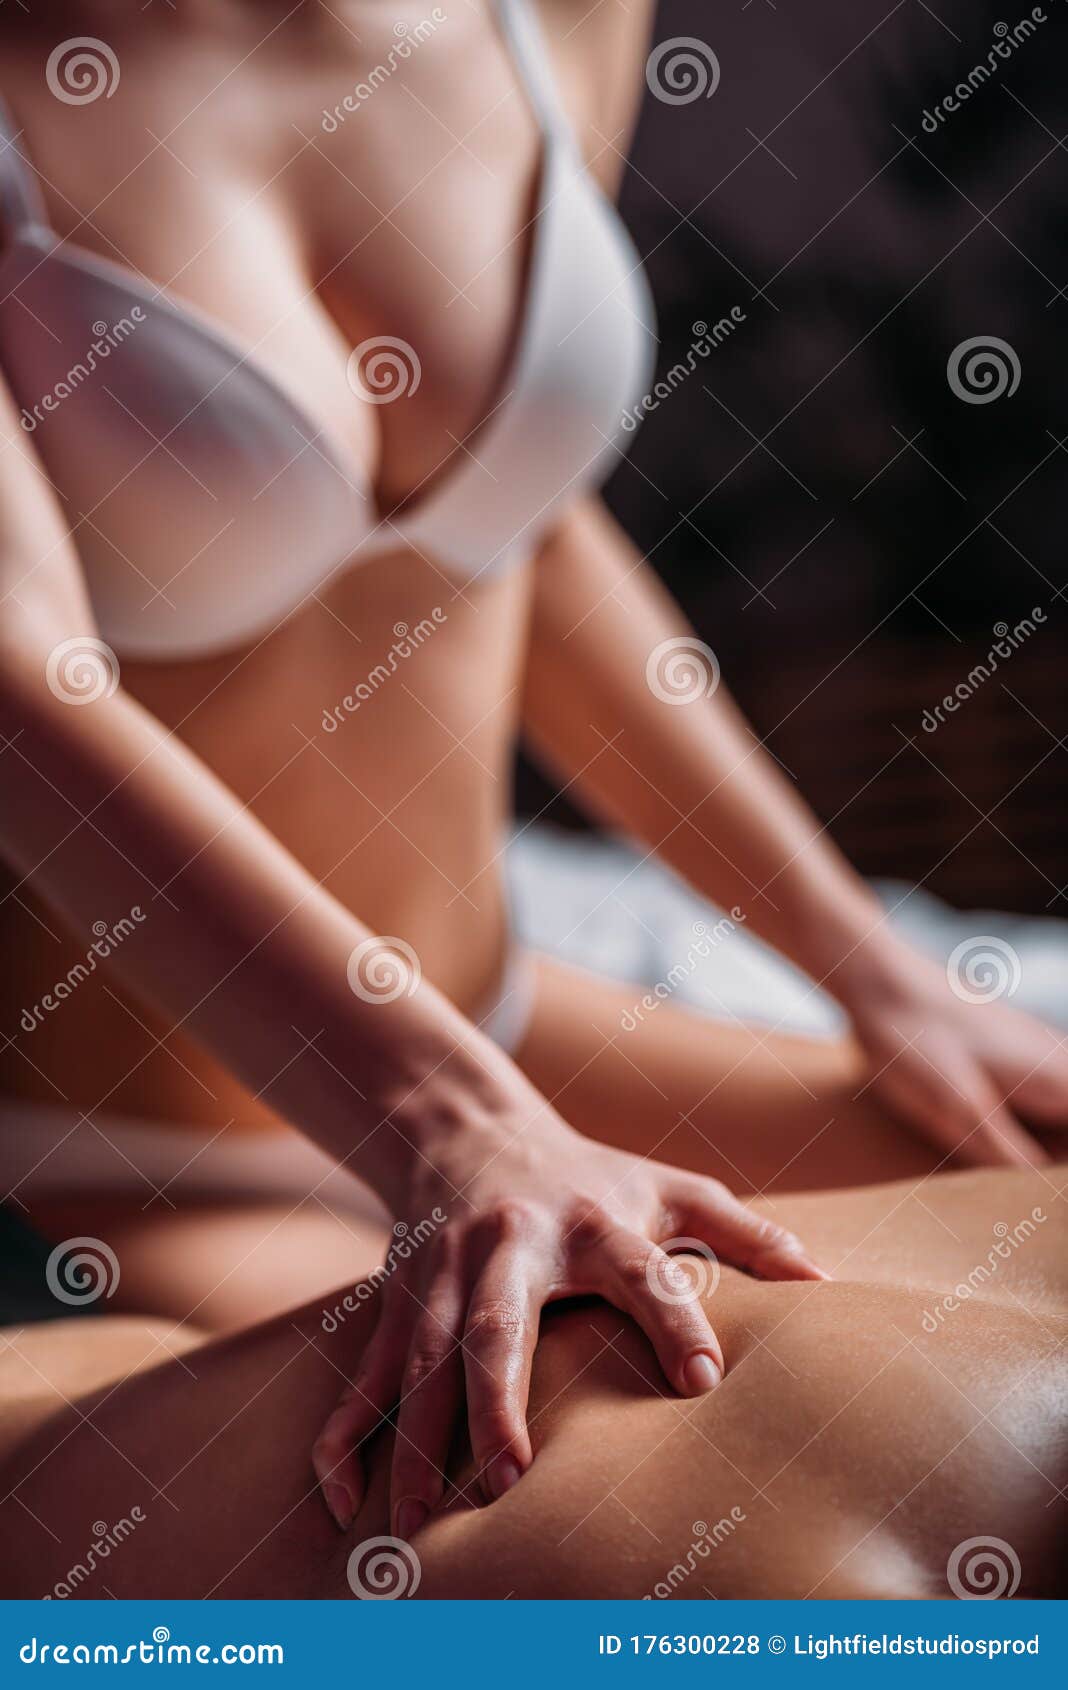 массаж грудью бедрами фото 115